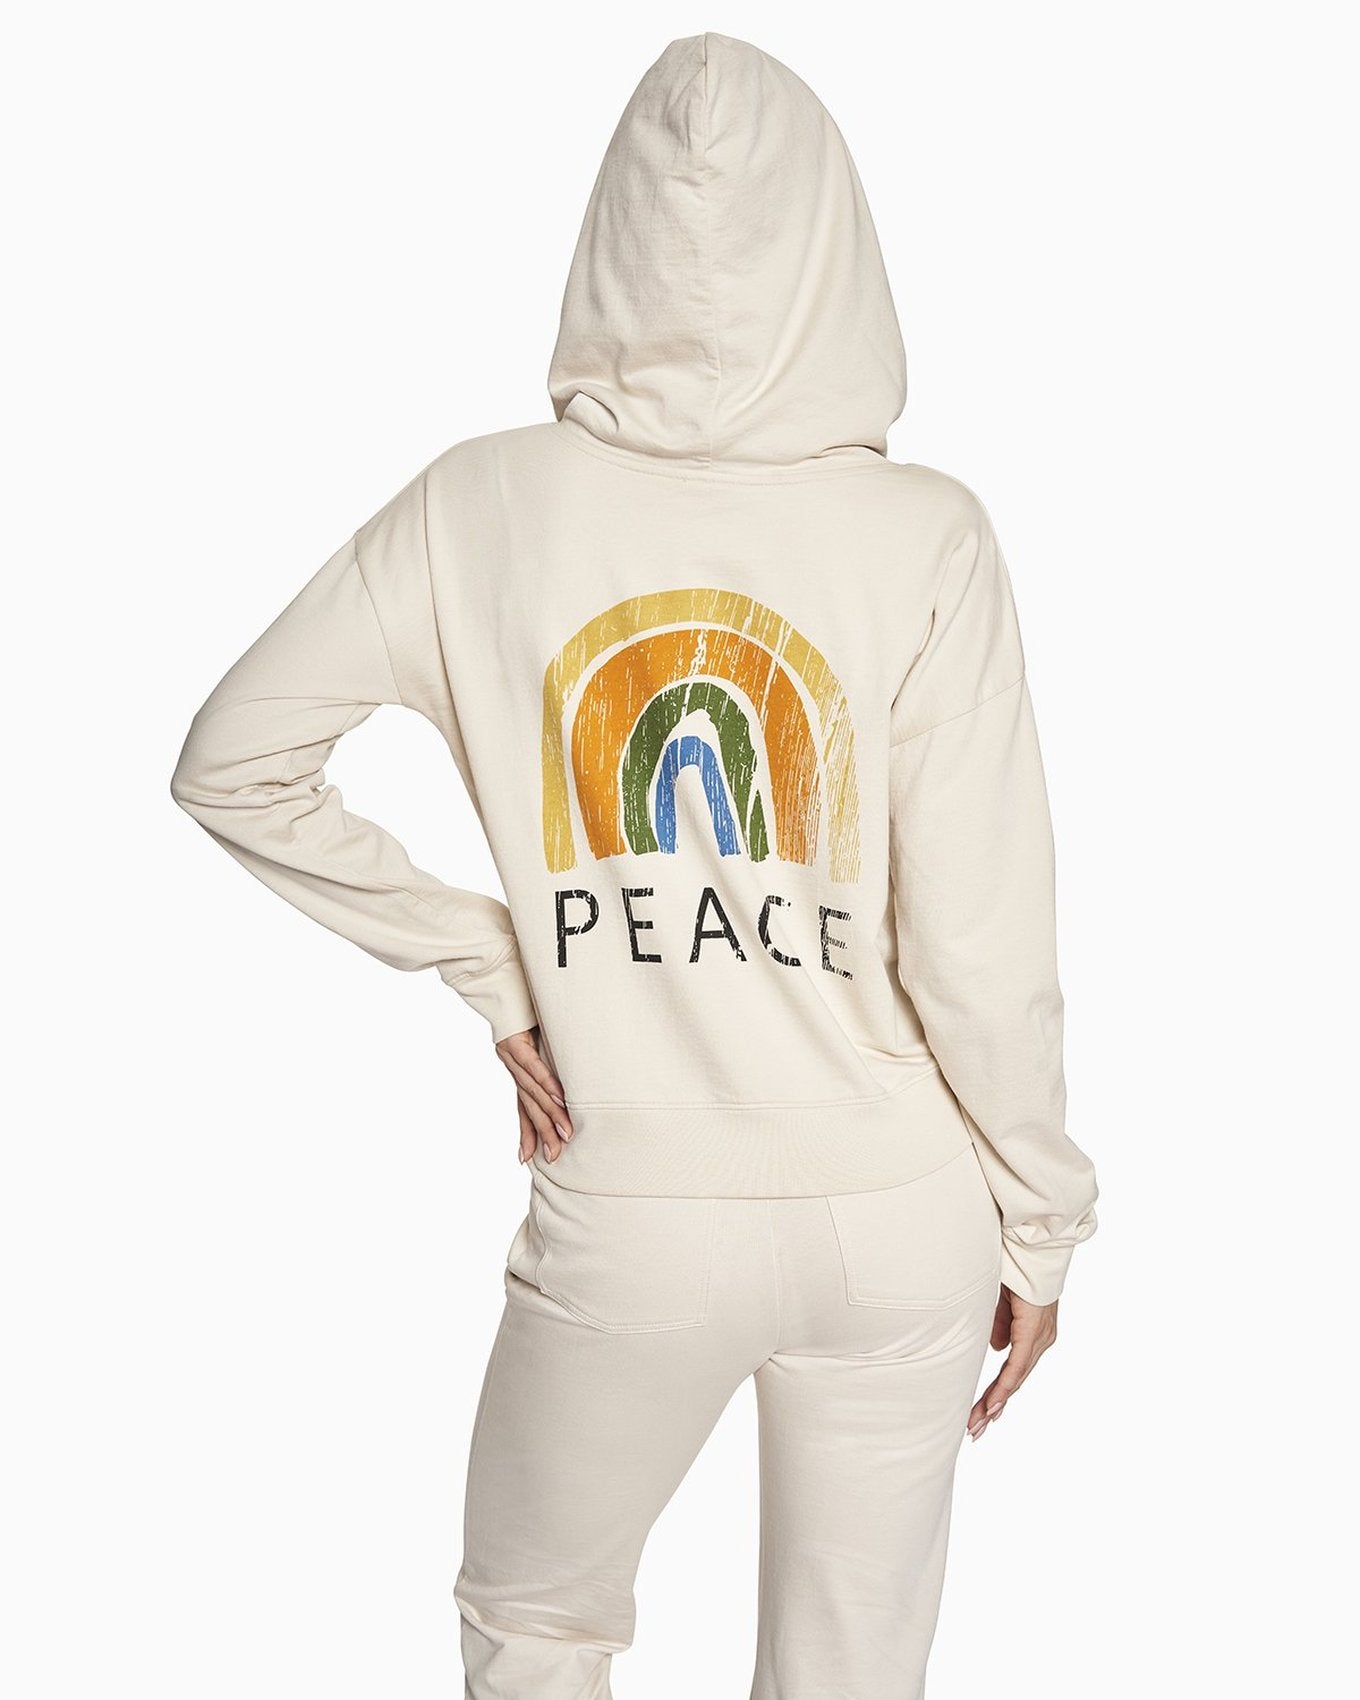 YesAnd Organic "Rainbow Peace" Pullover Hoodie Pullover Hoodie in color Rainbow Peace and shape sweatshirt